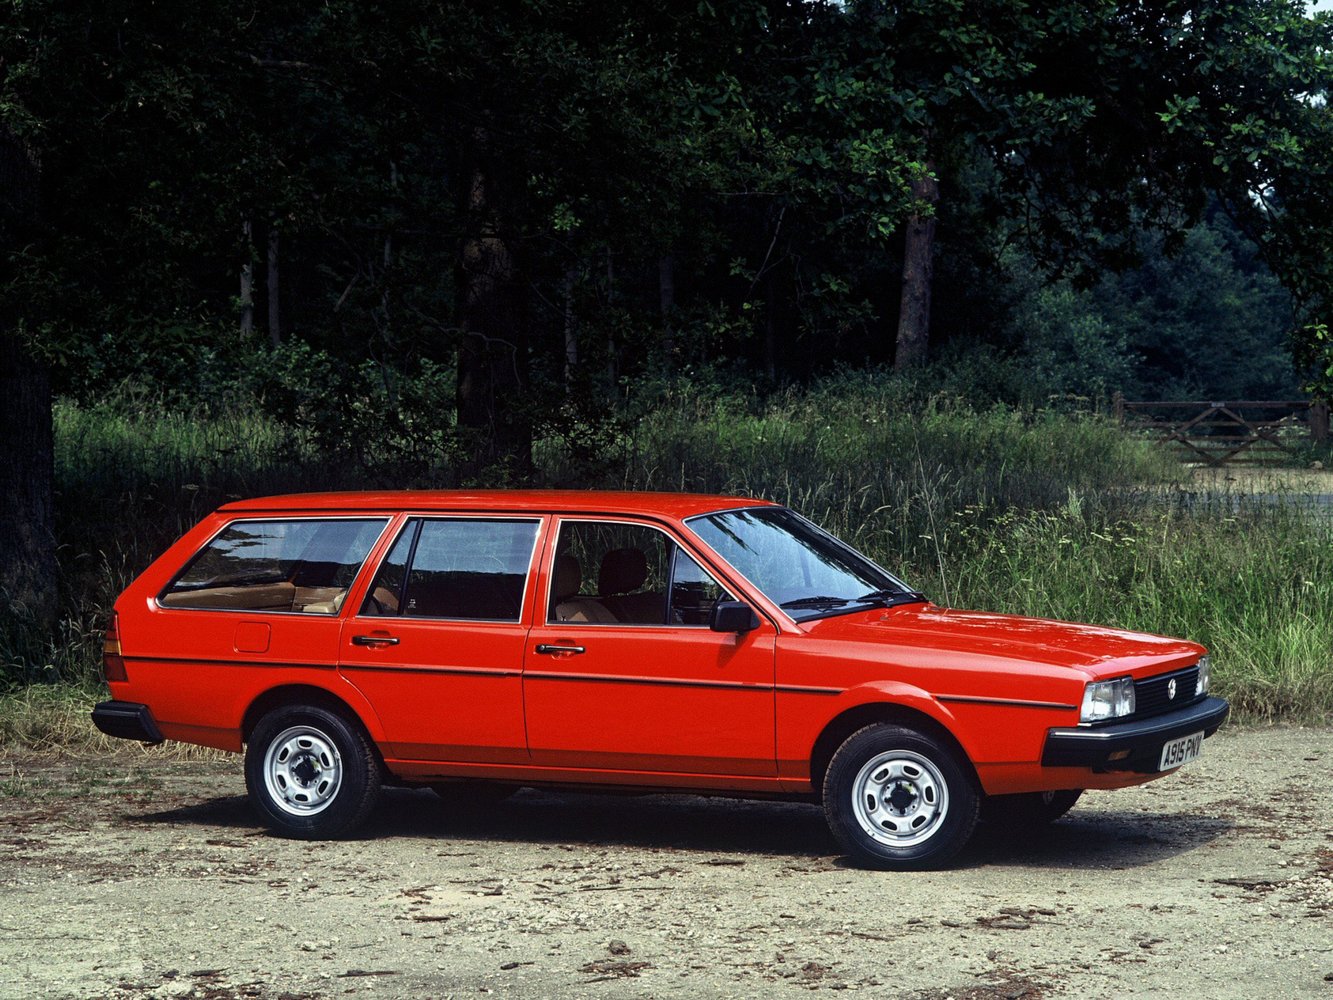 универсал Volkswagen Passat 1980 - 1988г выпуска модификация 1.3 MT (55 л.с.)